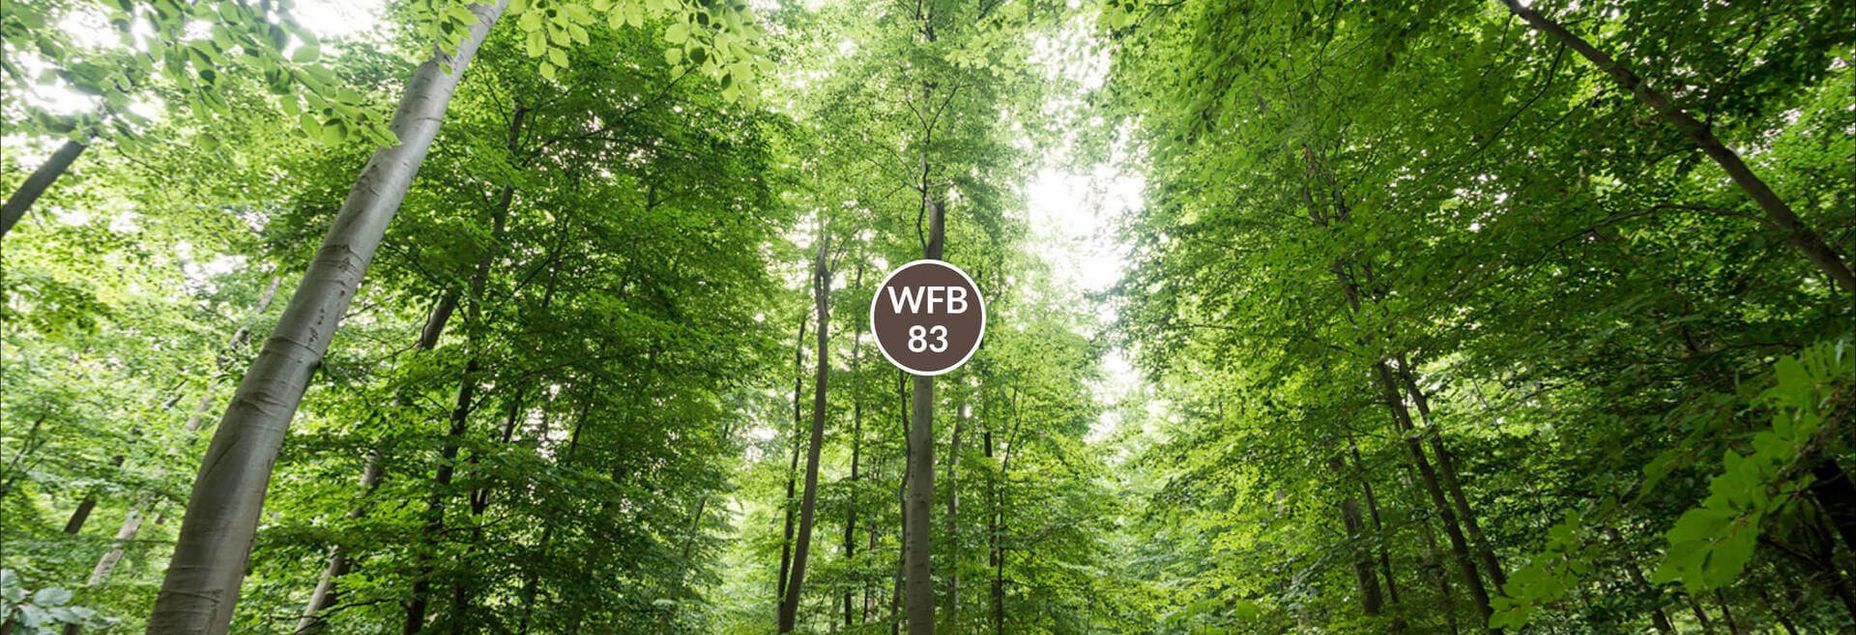 FriedWald-Onlineshop WFB 83 